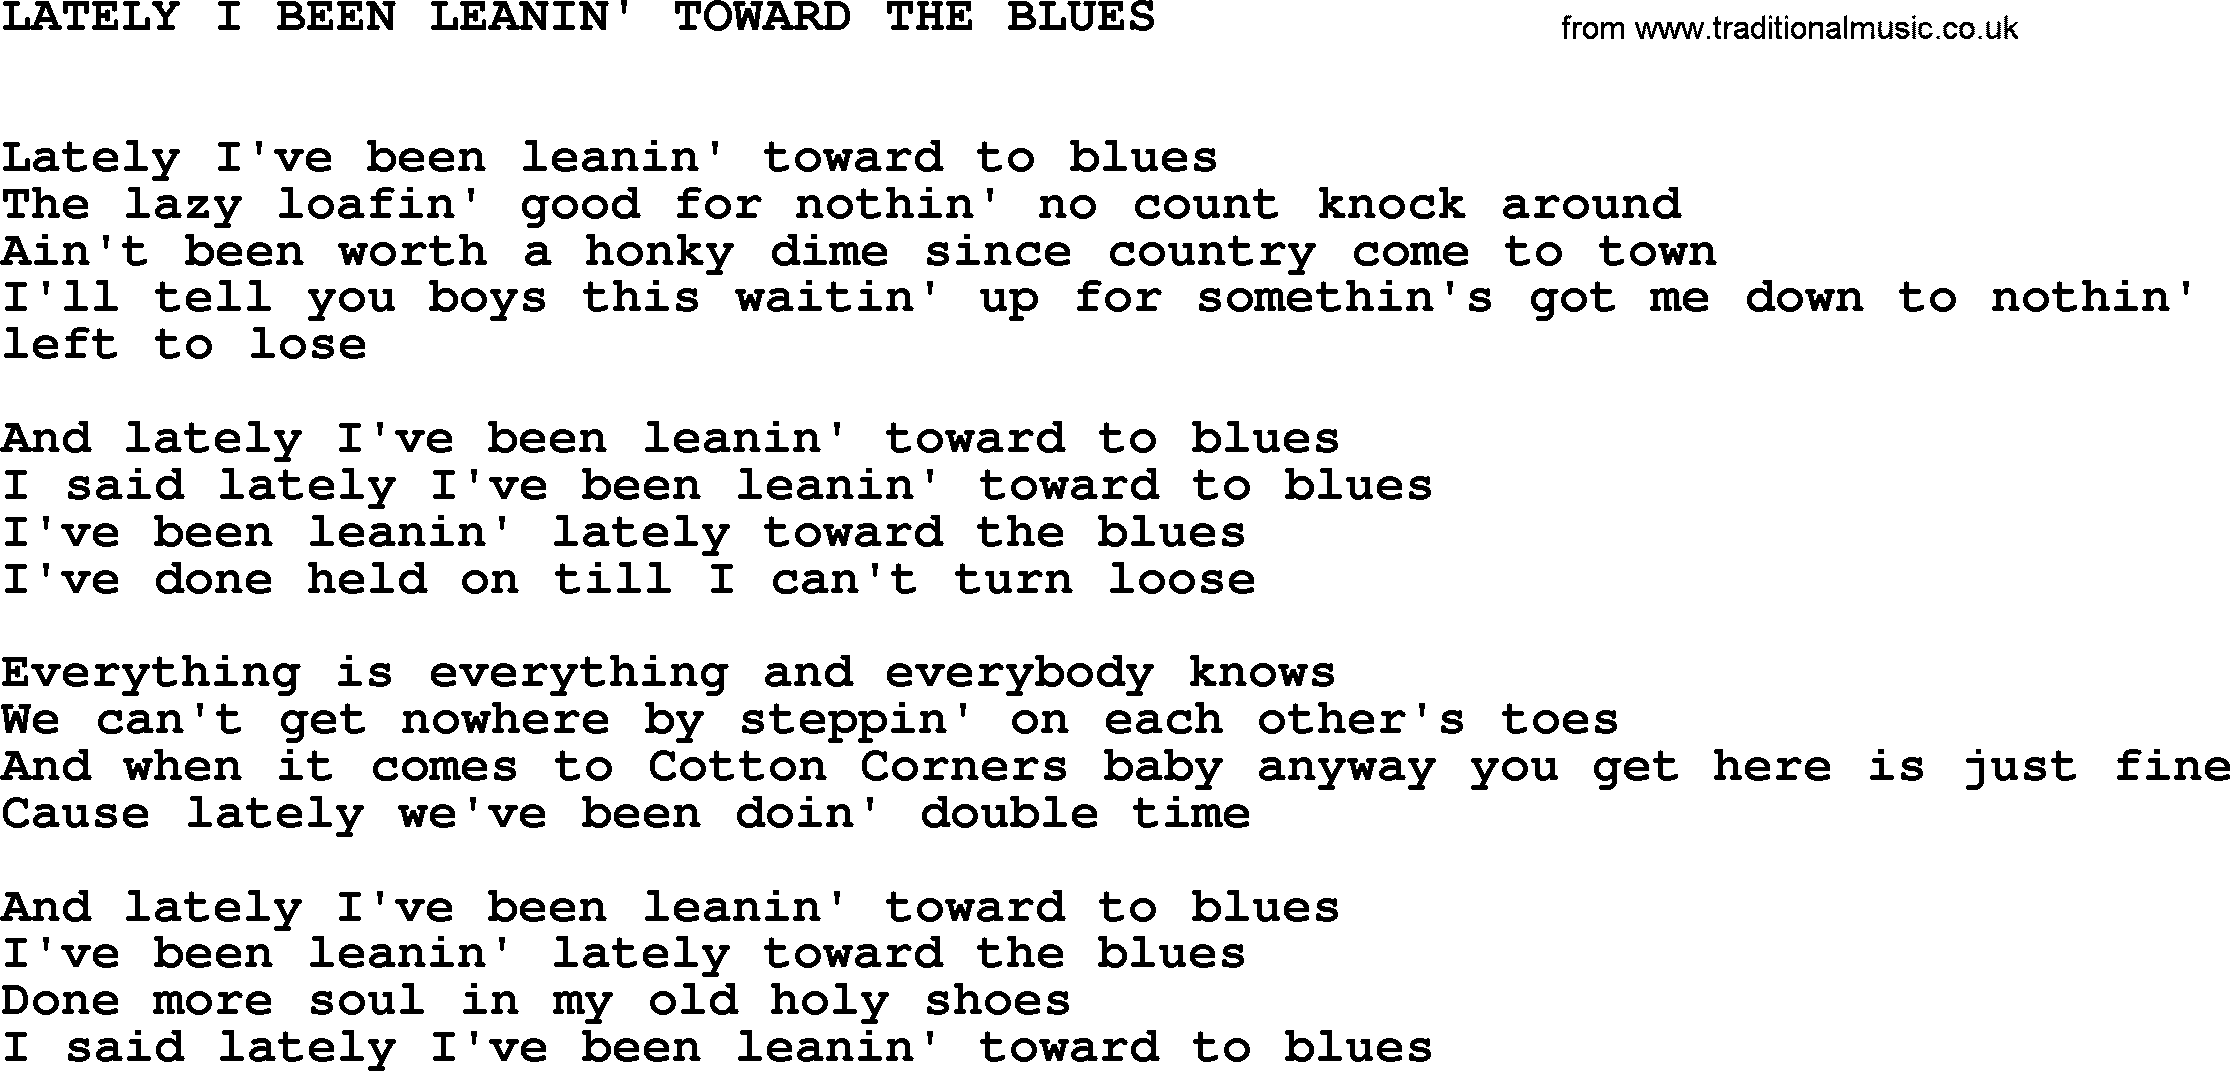 Johnny Cash song Lately I Been Leanin' Toward The Blues.txt lyrics